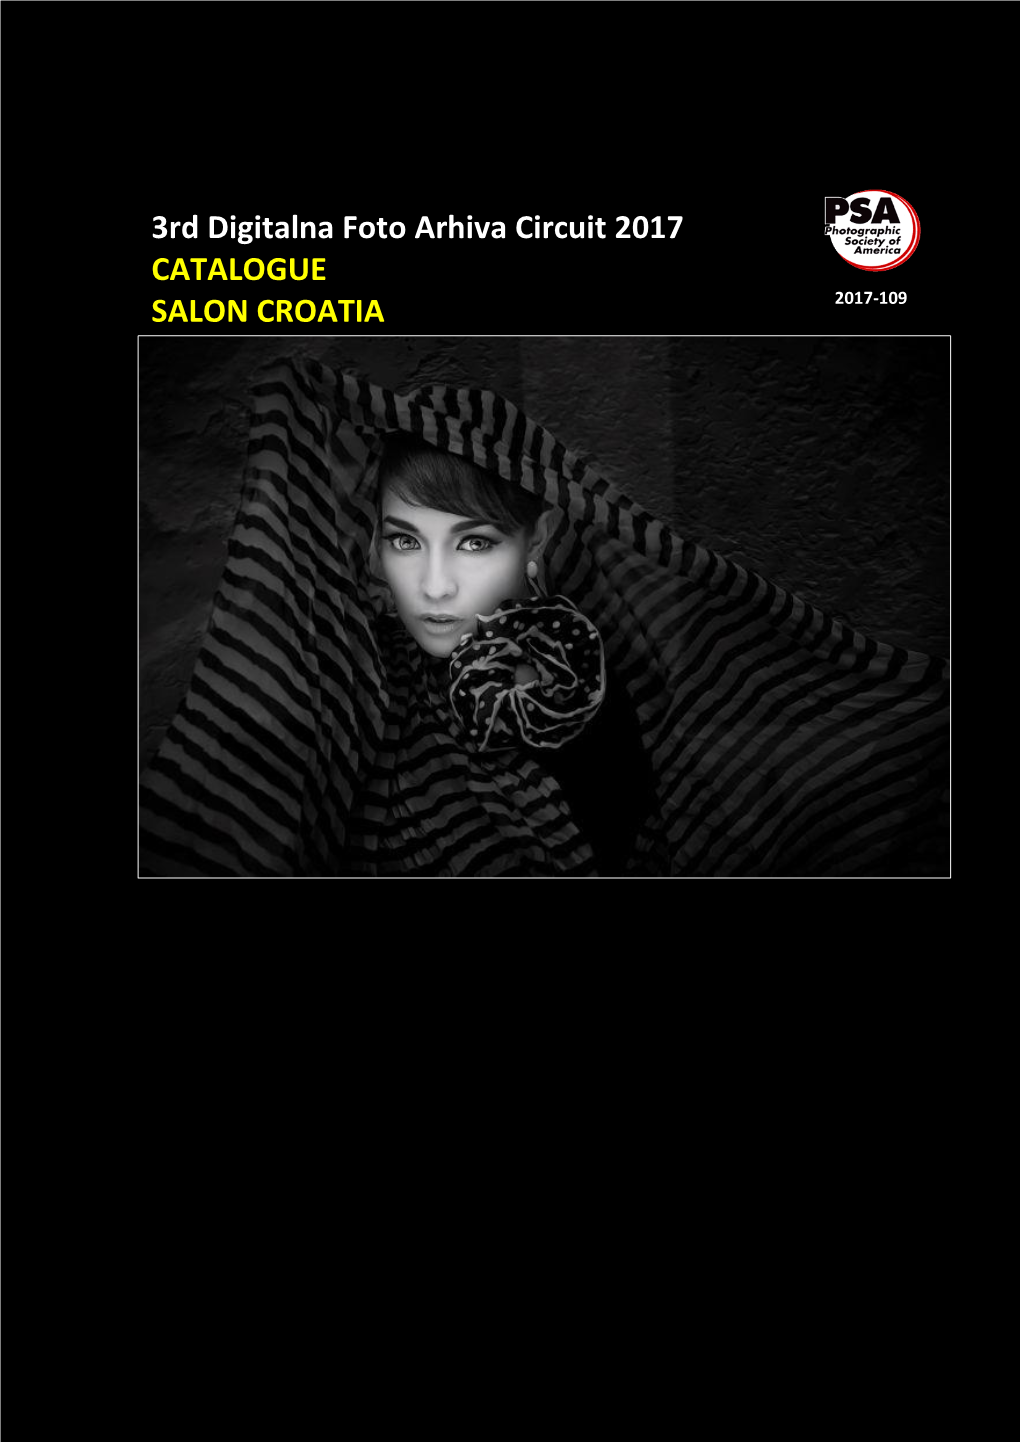 3Rd Digitalna Foto Arhiva Circuit 2017 CATALOGUE SALON CROATIA 2017-109